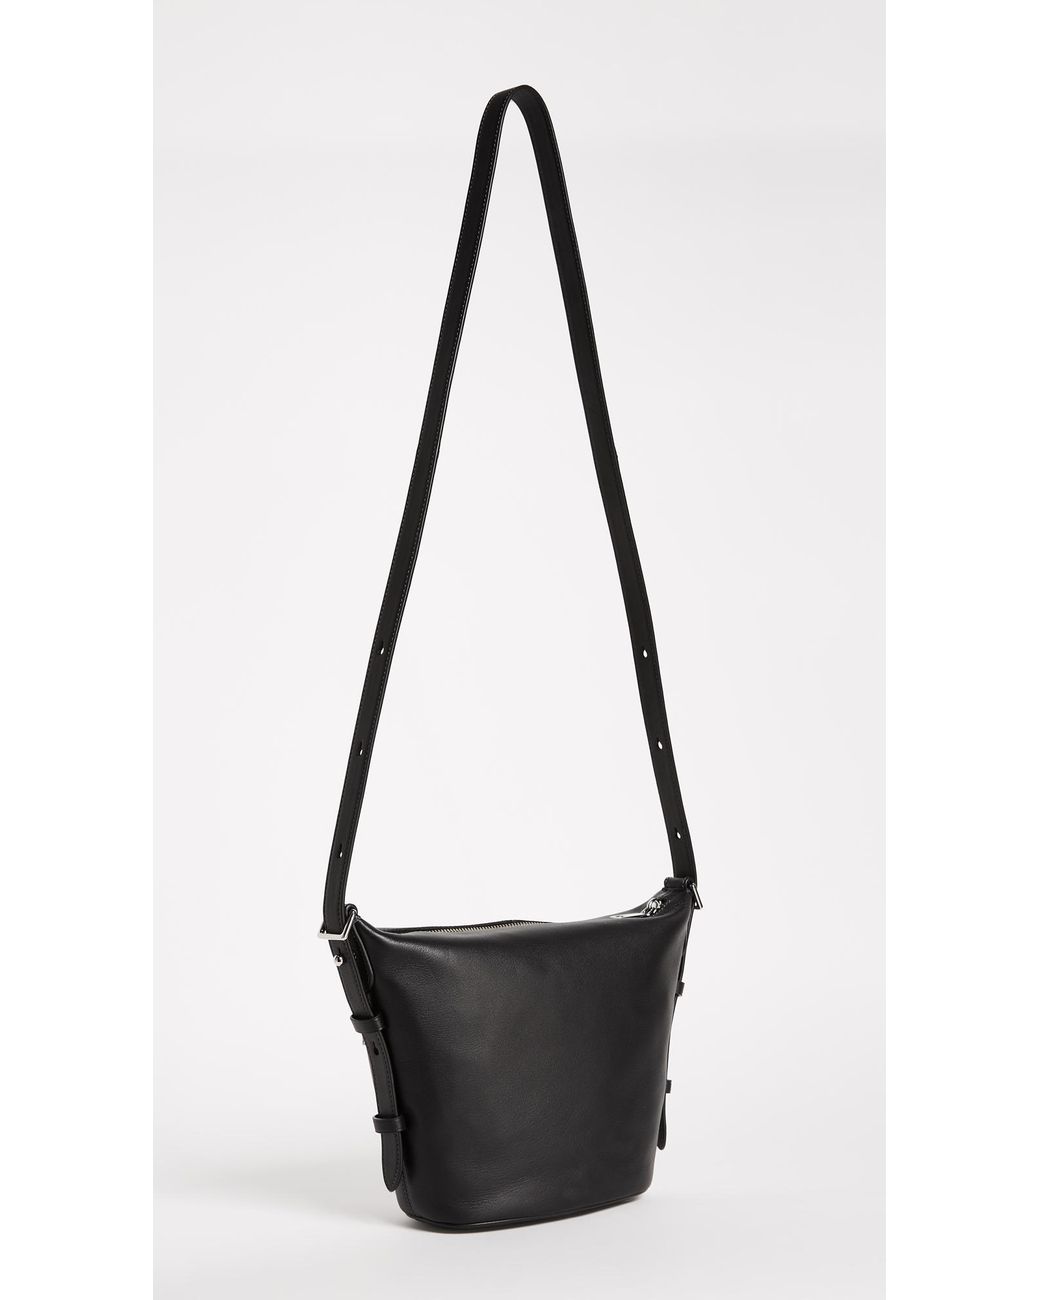 Marc Jacobs The Mini Sling Bag in Black